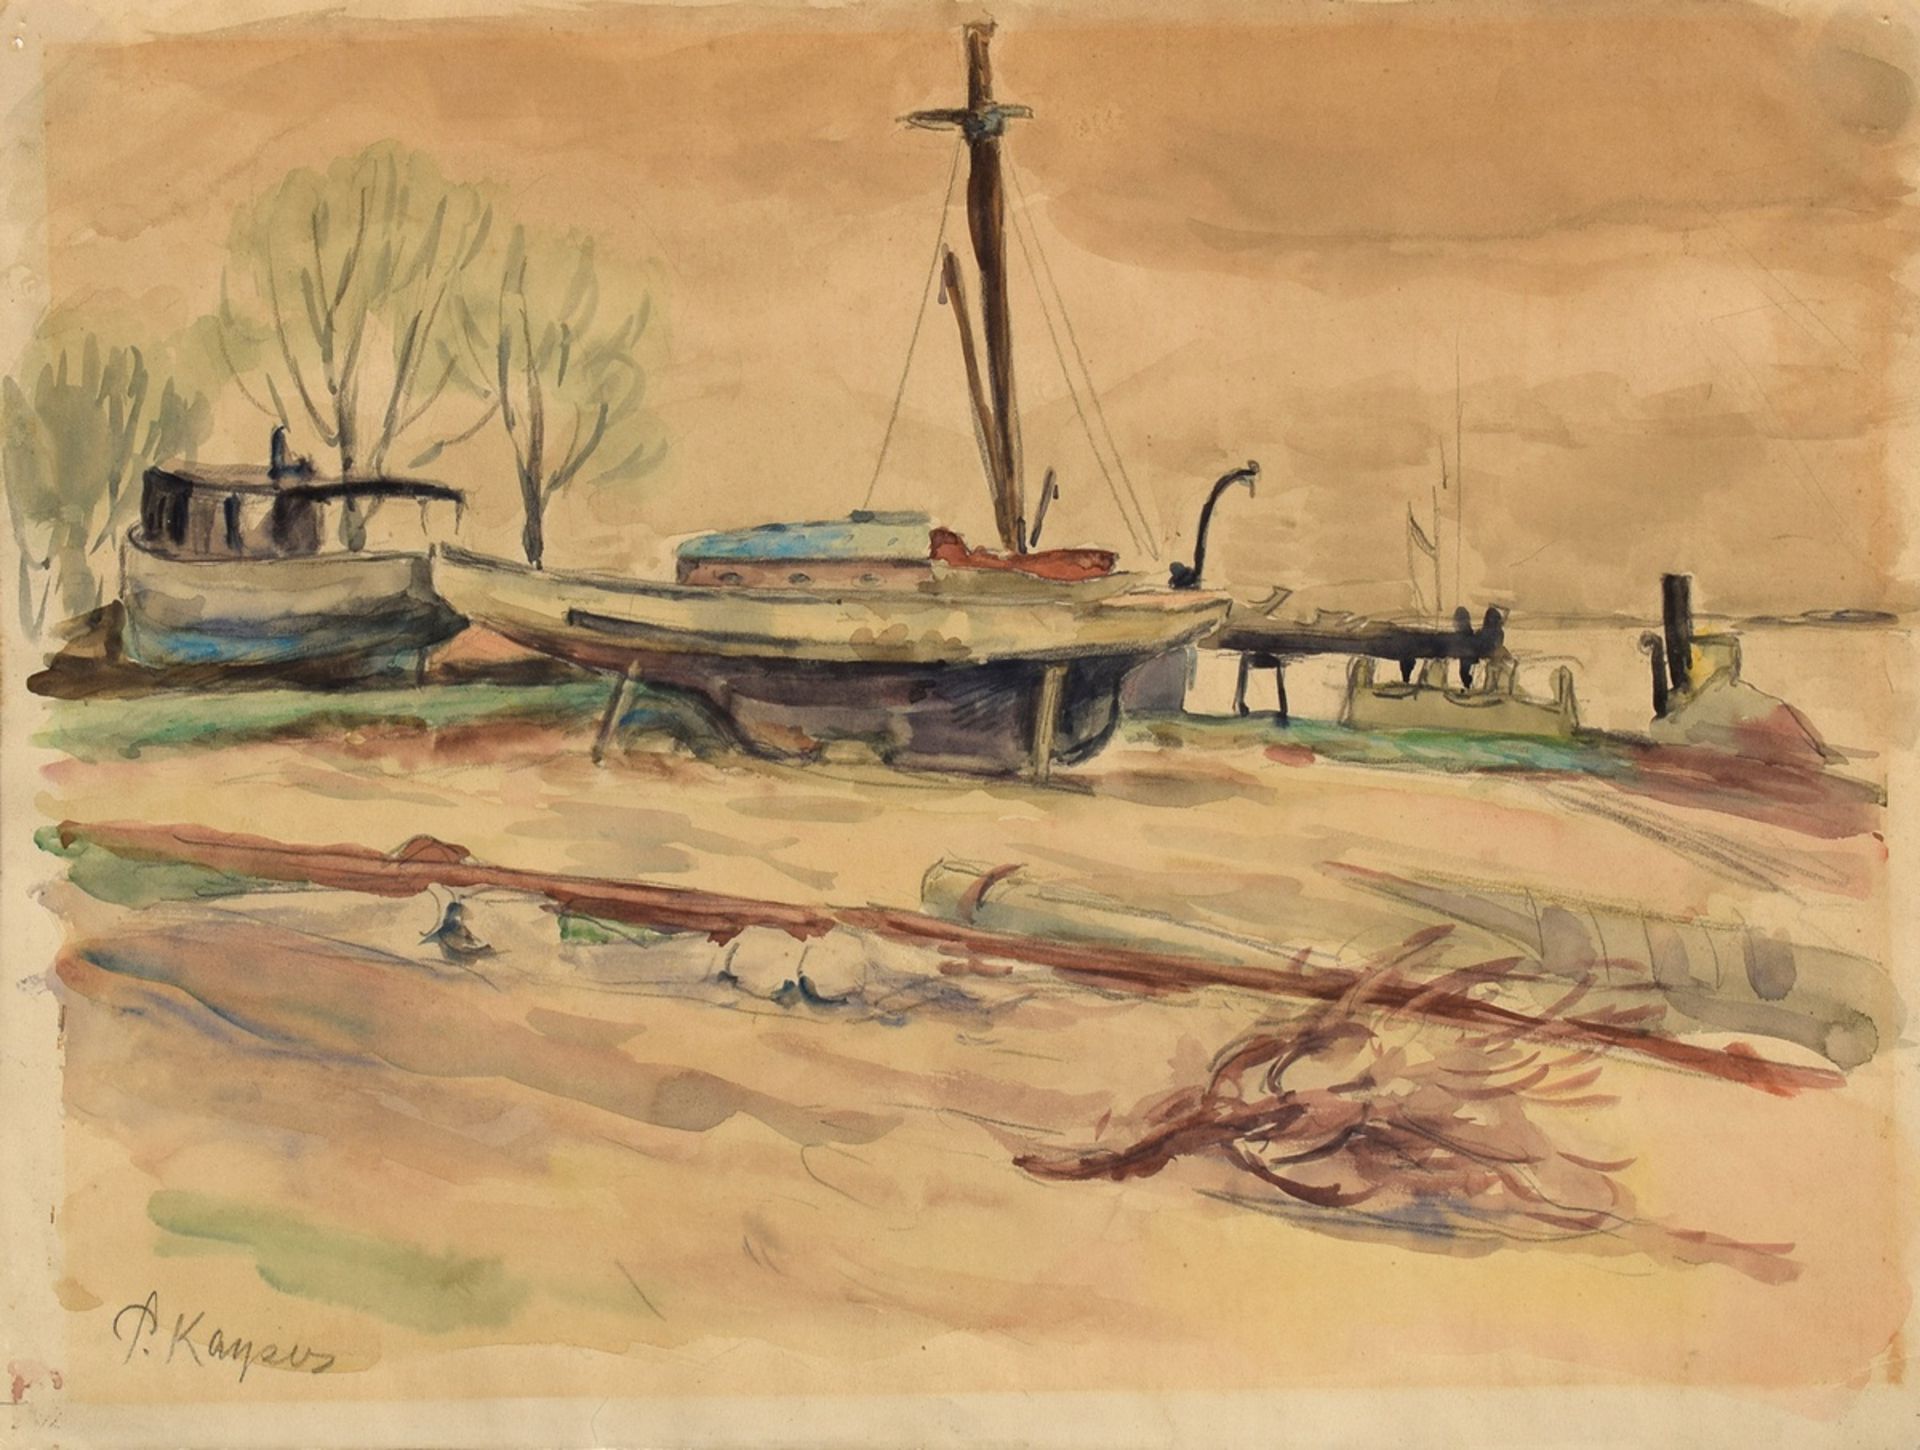 Kayser, Jean Paul (1869-1942) "Boat mooring", pencil/watercolor, b.l. sign., 29x39cm, slightly yell